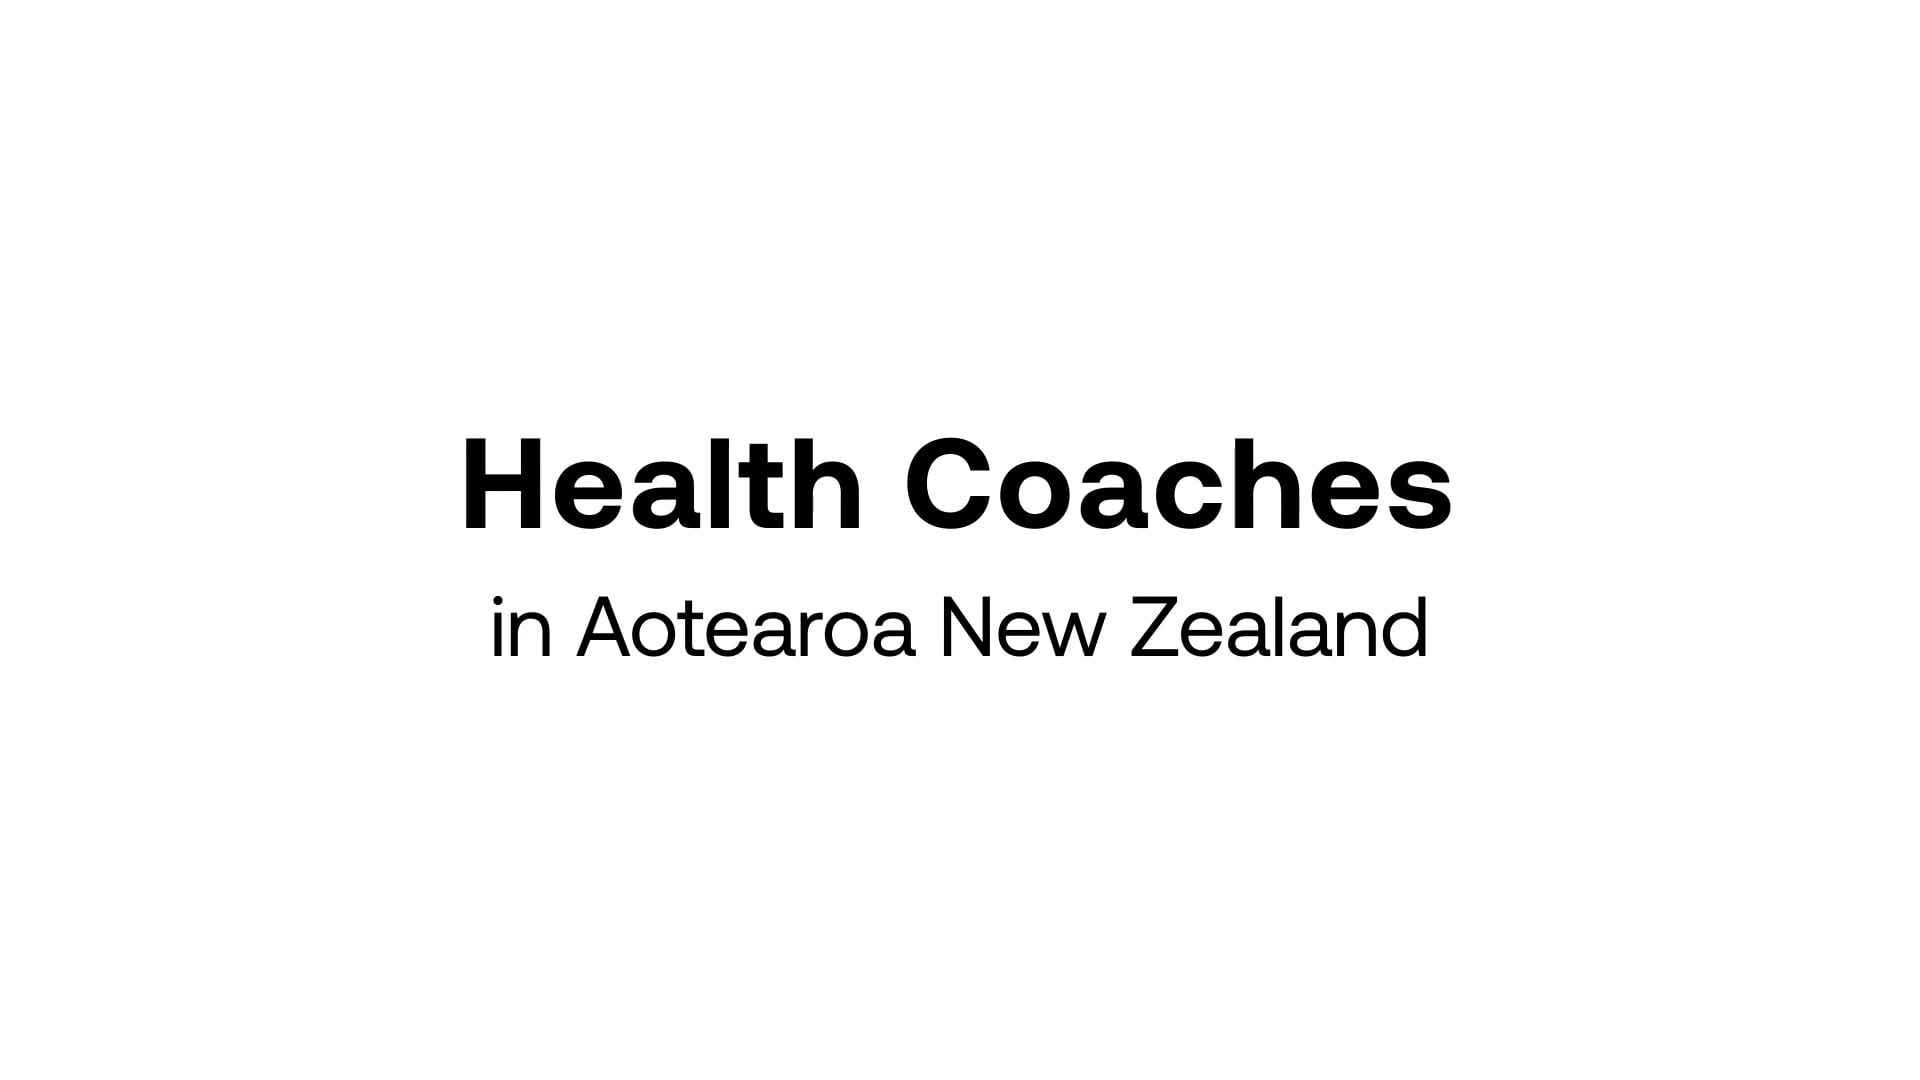 Health coaches in Aotearoa New Zealand